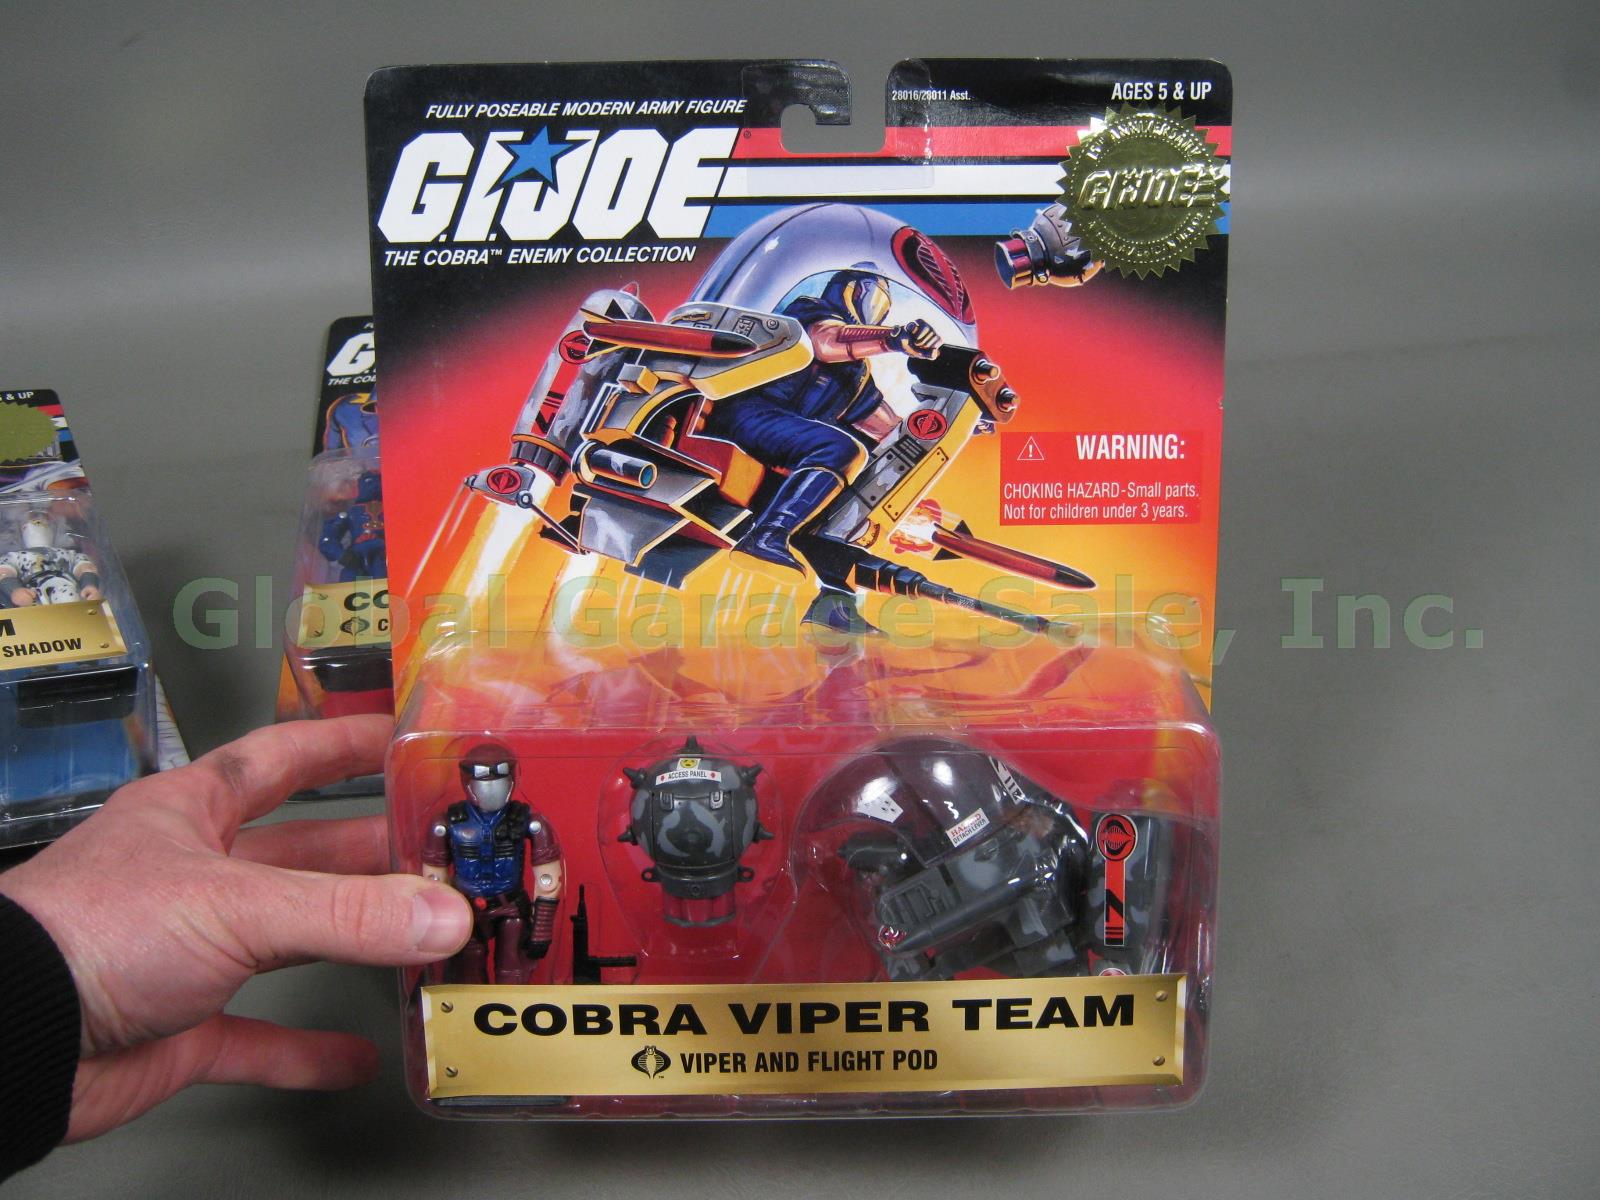 4 Sealed GI Joe Figure Sets Arctic Mission Commando Cobra Command Viper Team Lot 4